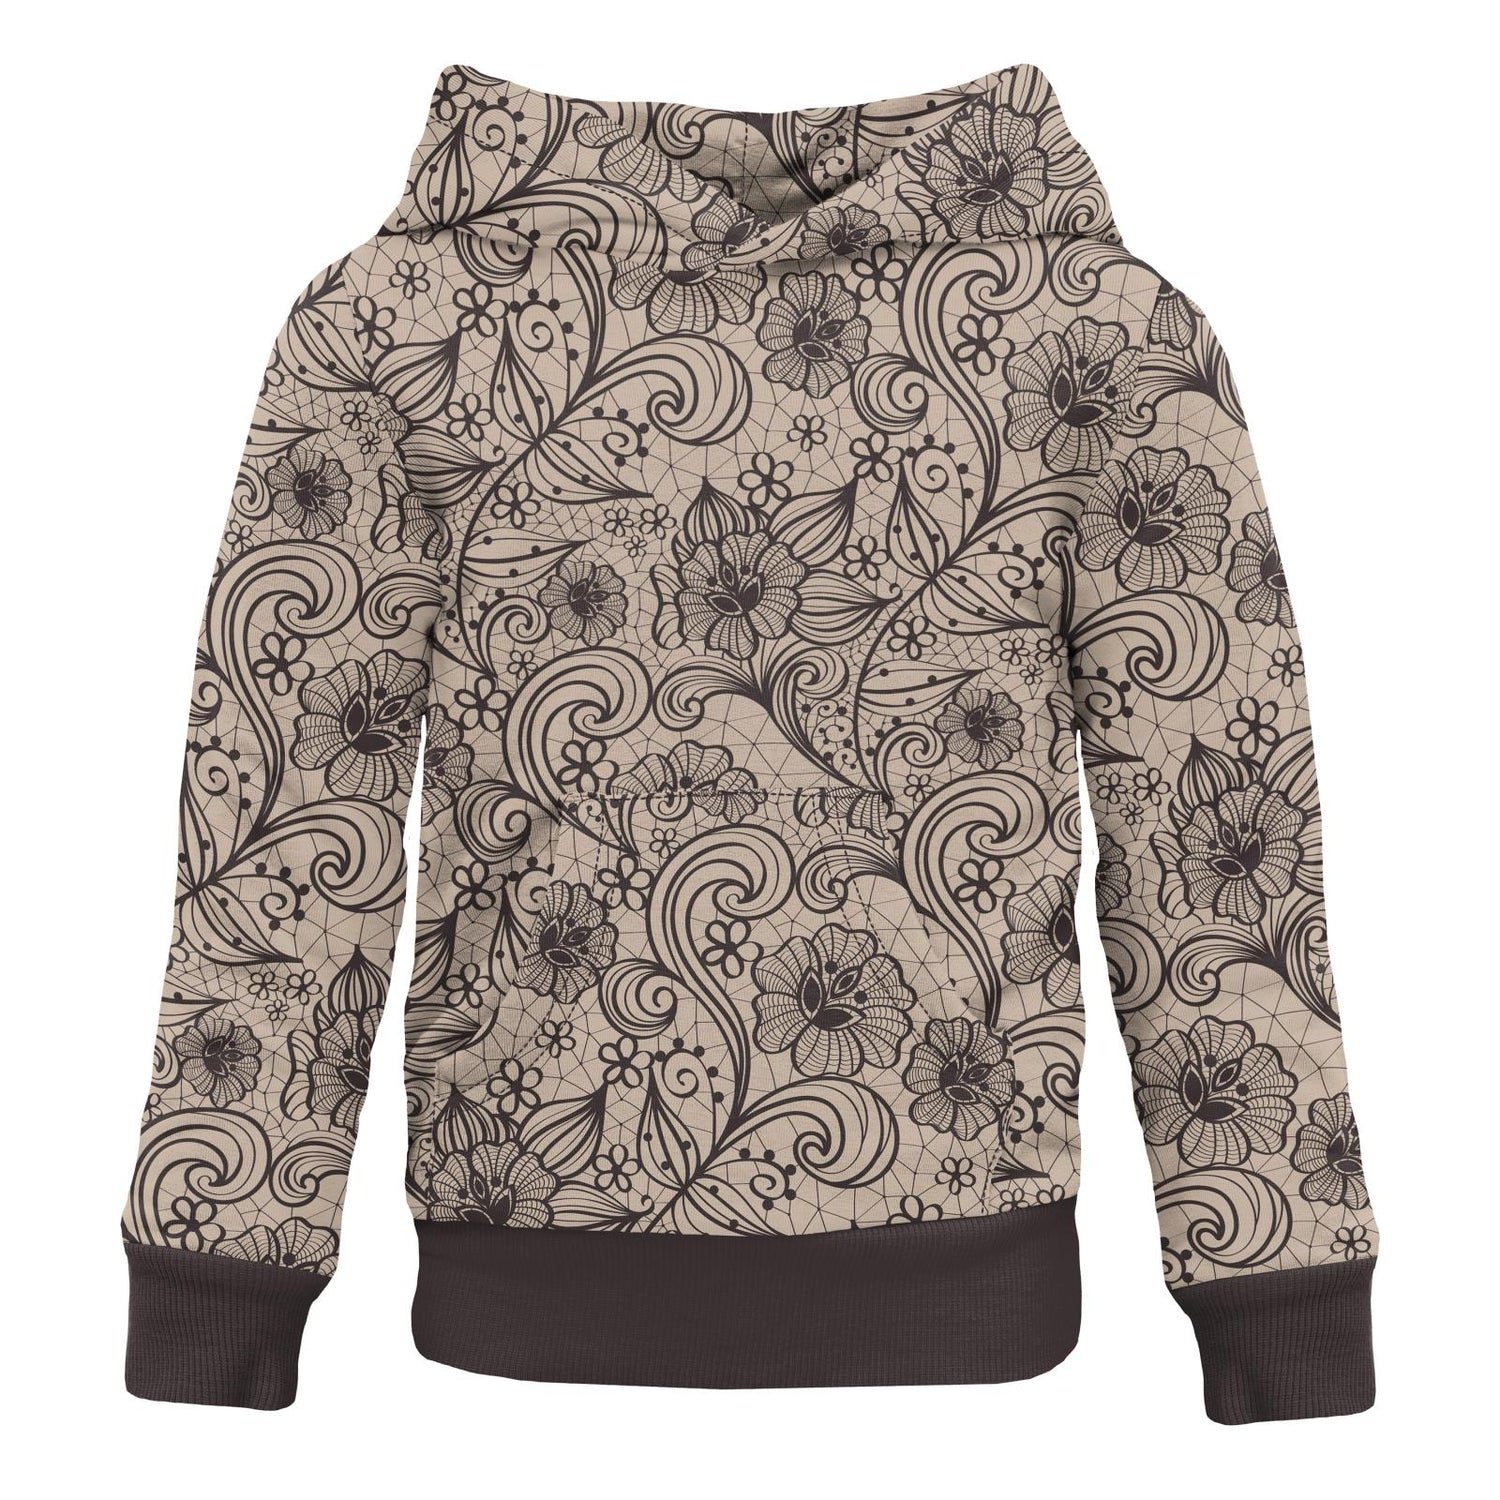 Print Fleece Kangaroo Pocket Pullover in Burlap Lace